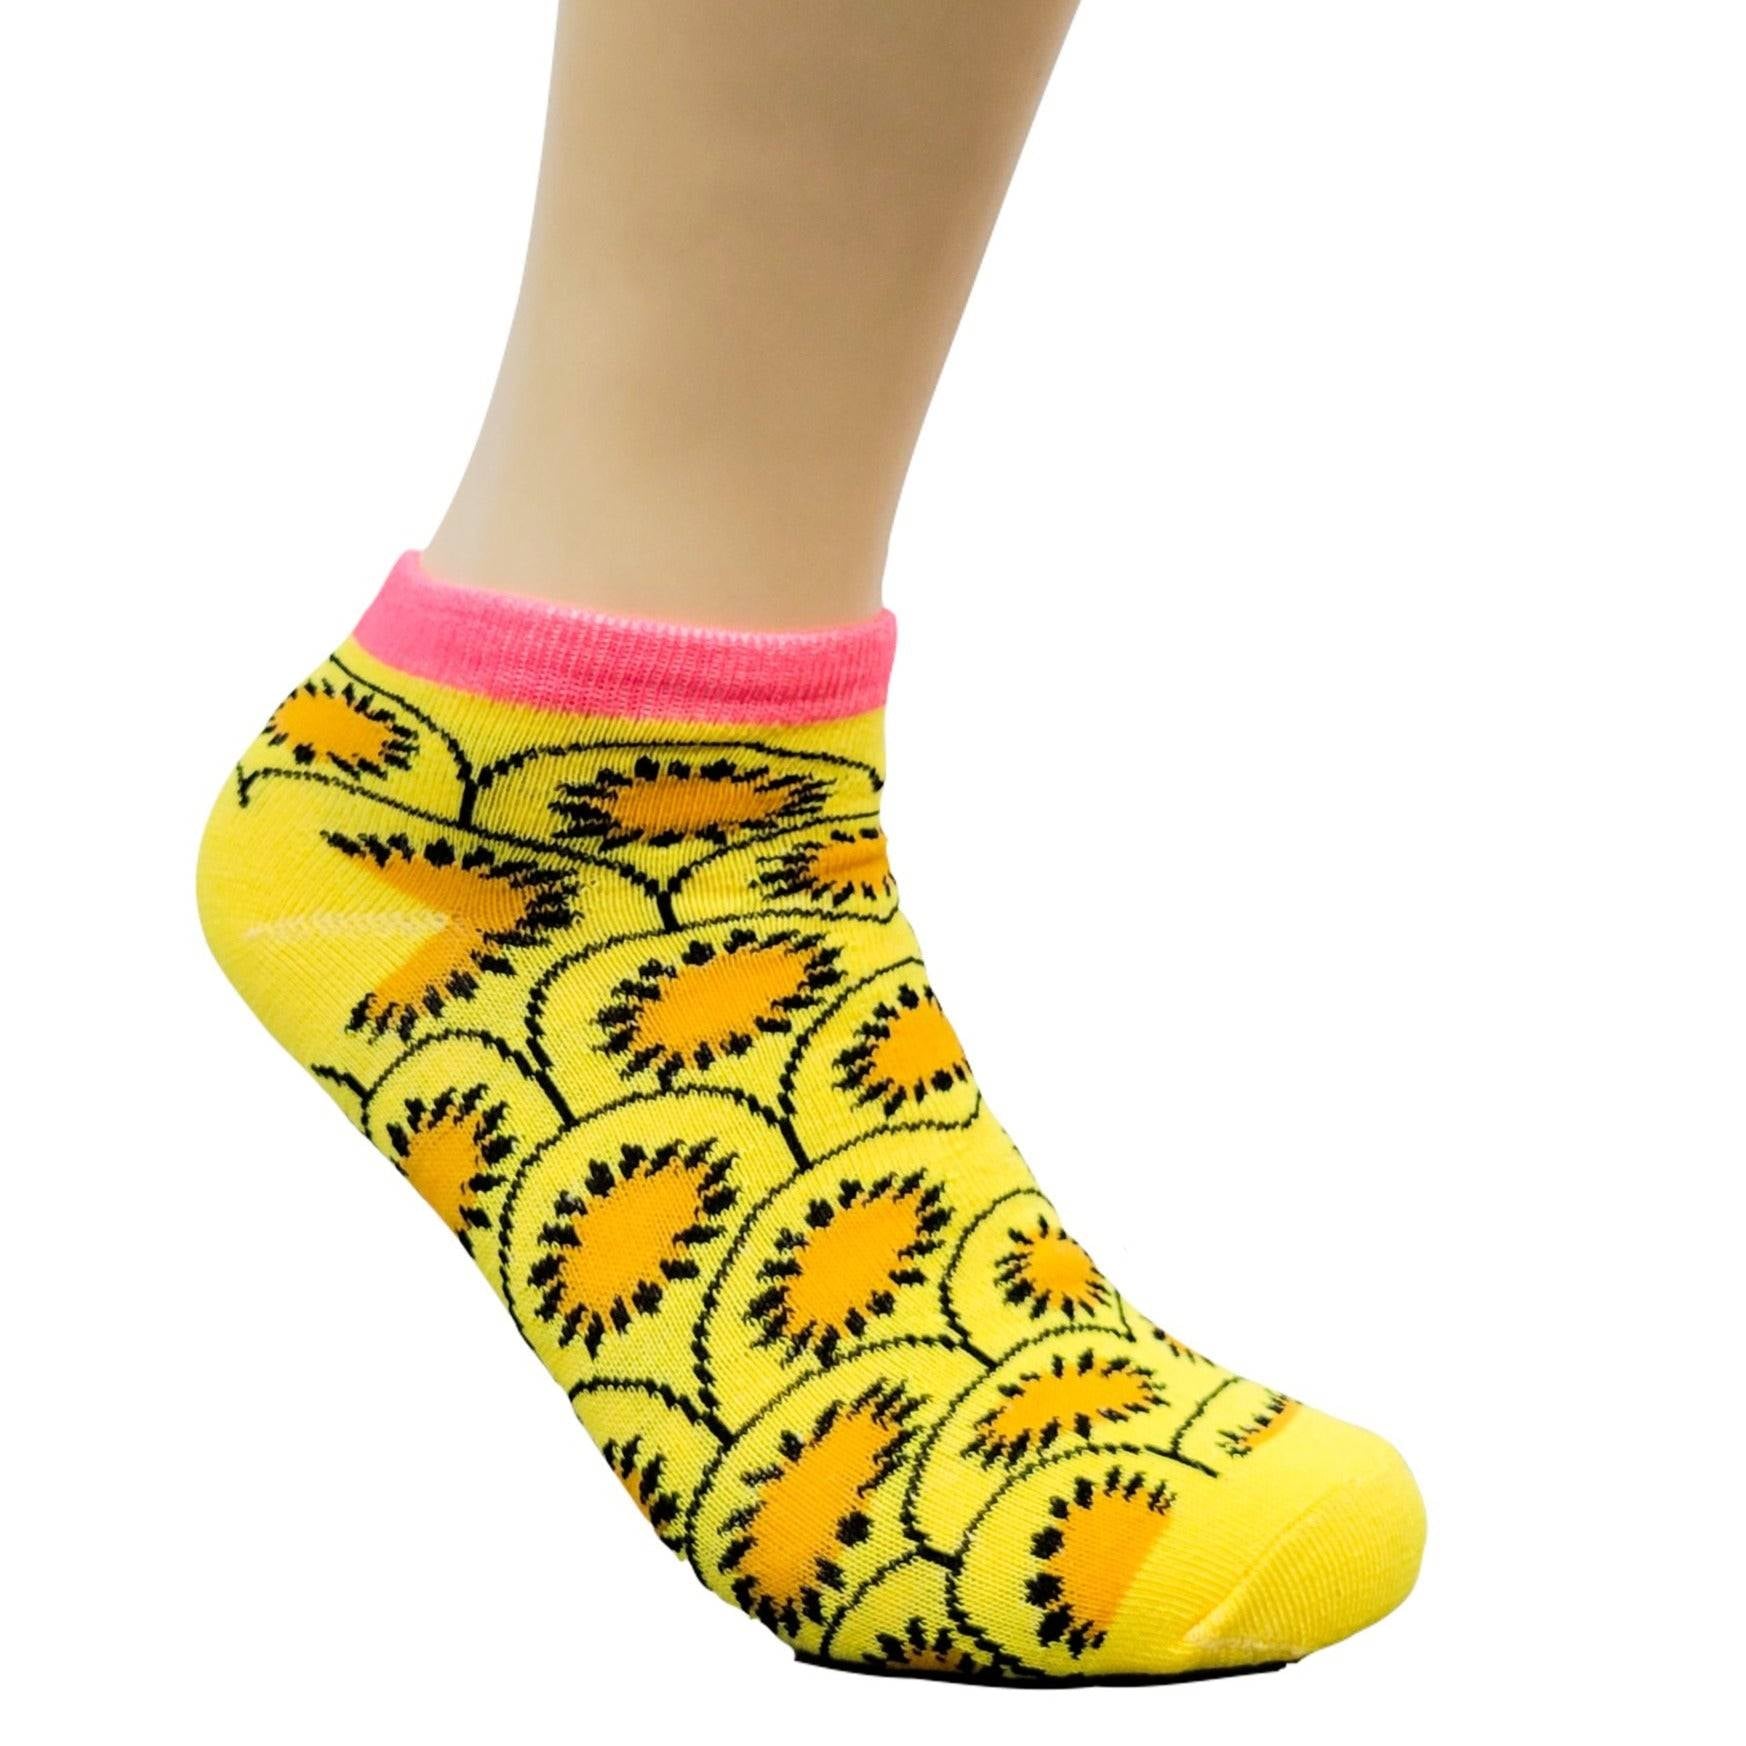 Golden Kiwi Patterned Ankle Socks (Adult Medium)